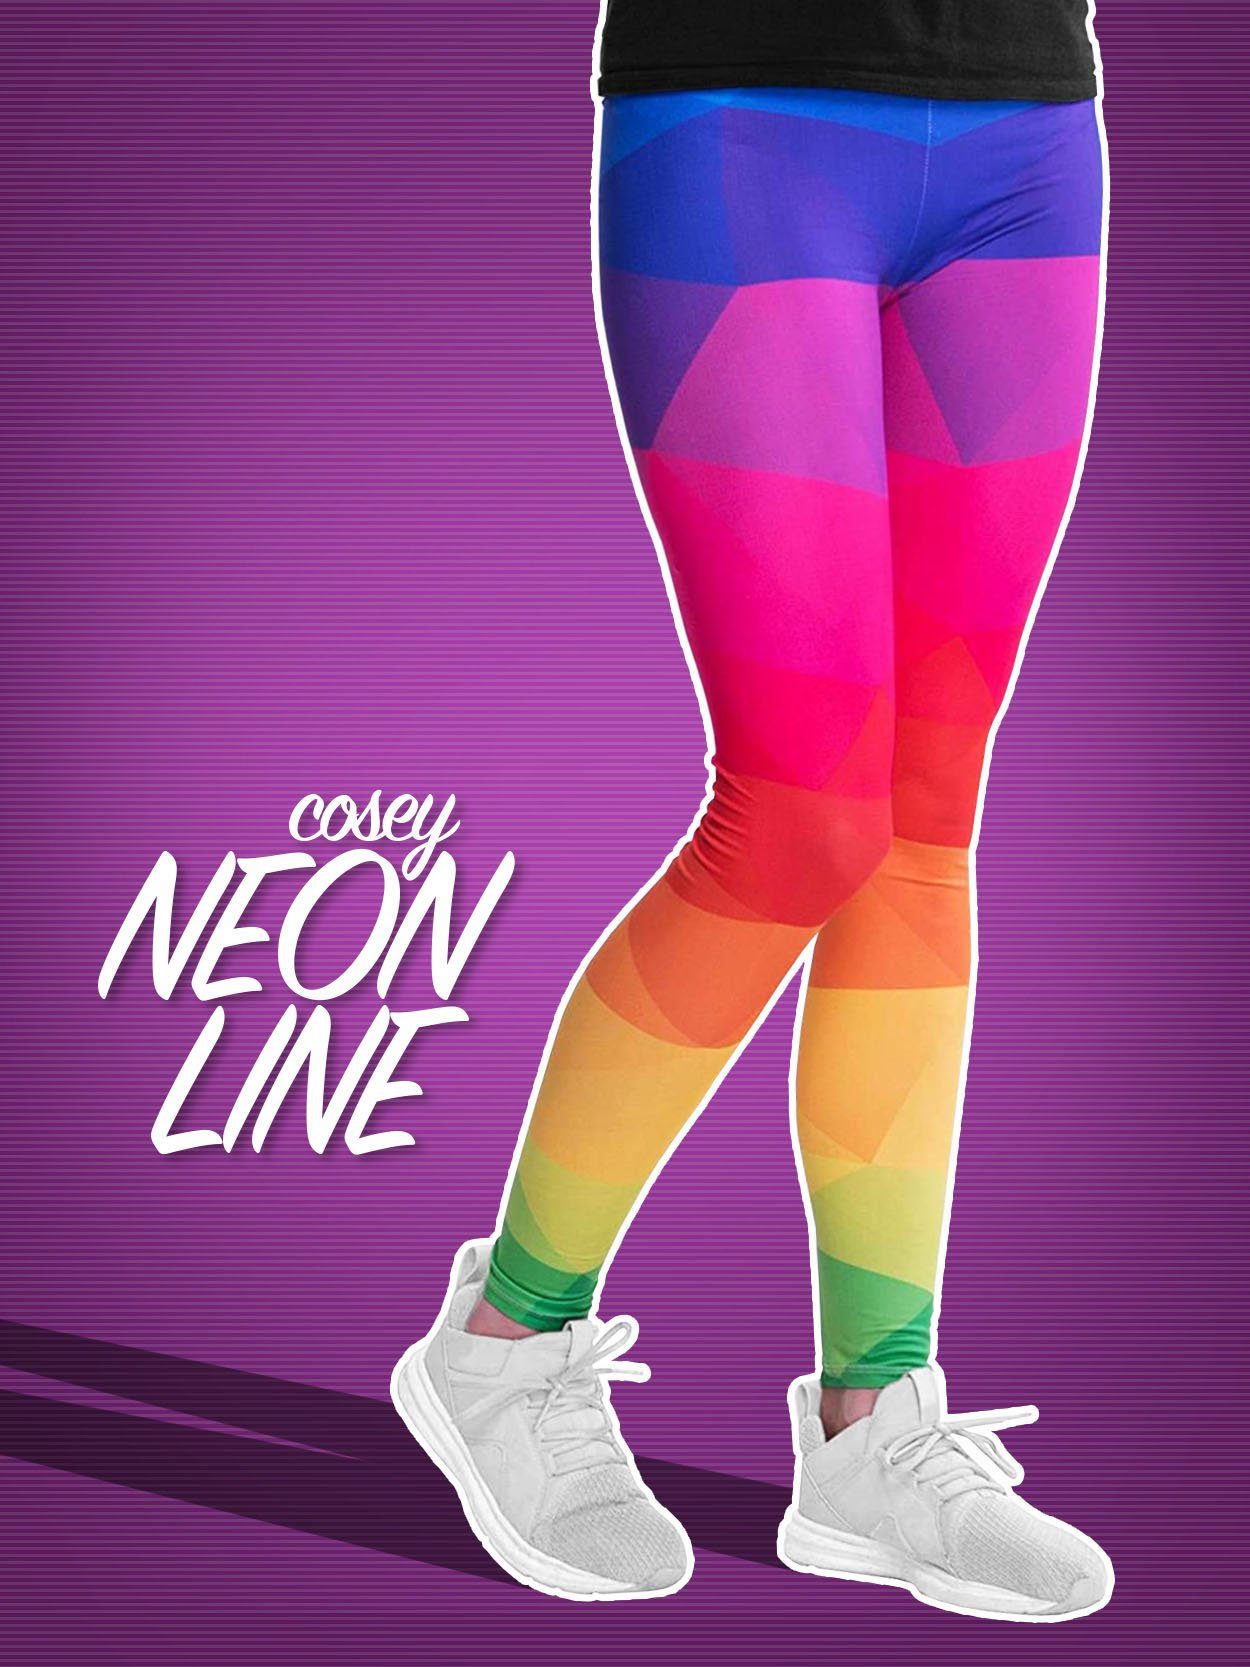 Leggings Cubic Leggings (Einheitsgröße XS Neo cosey Line Neon - L)